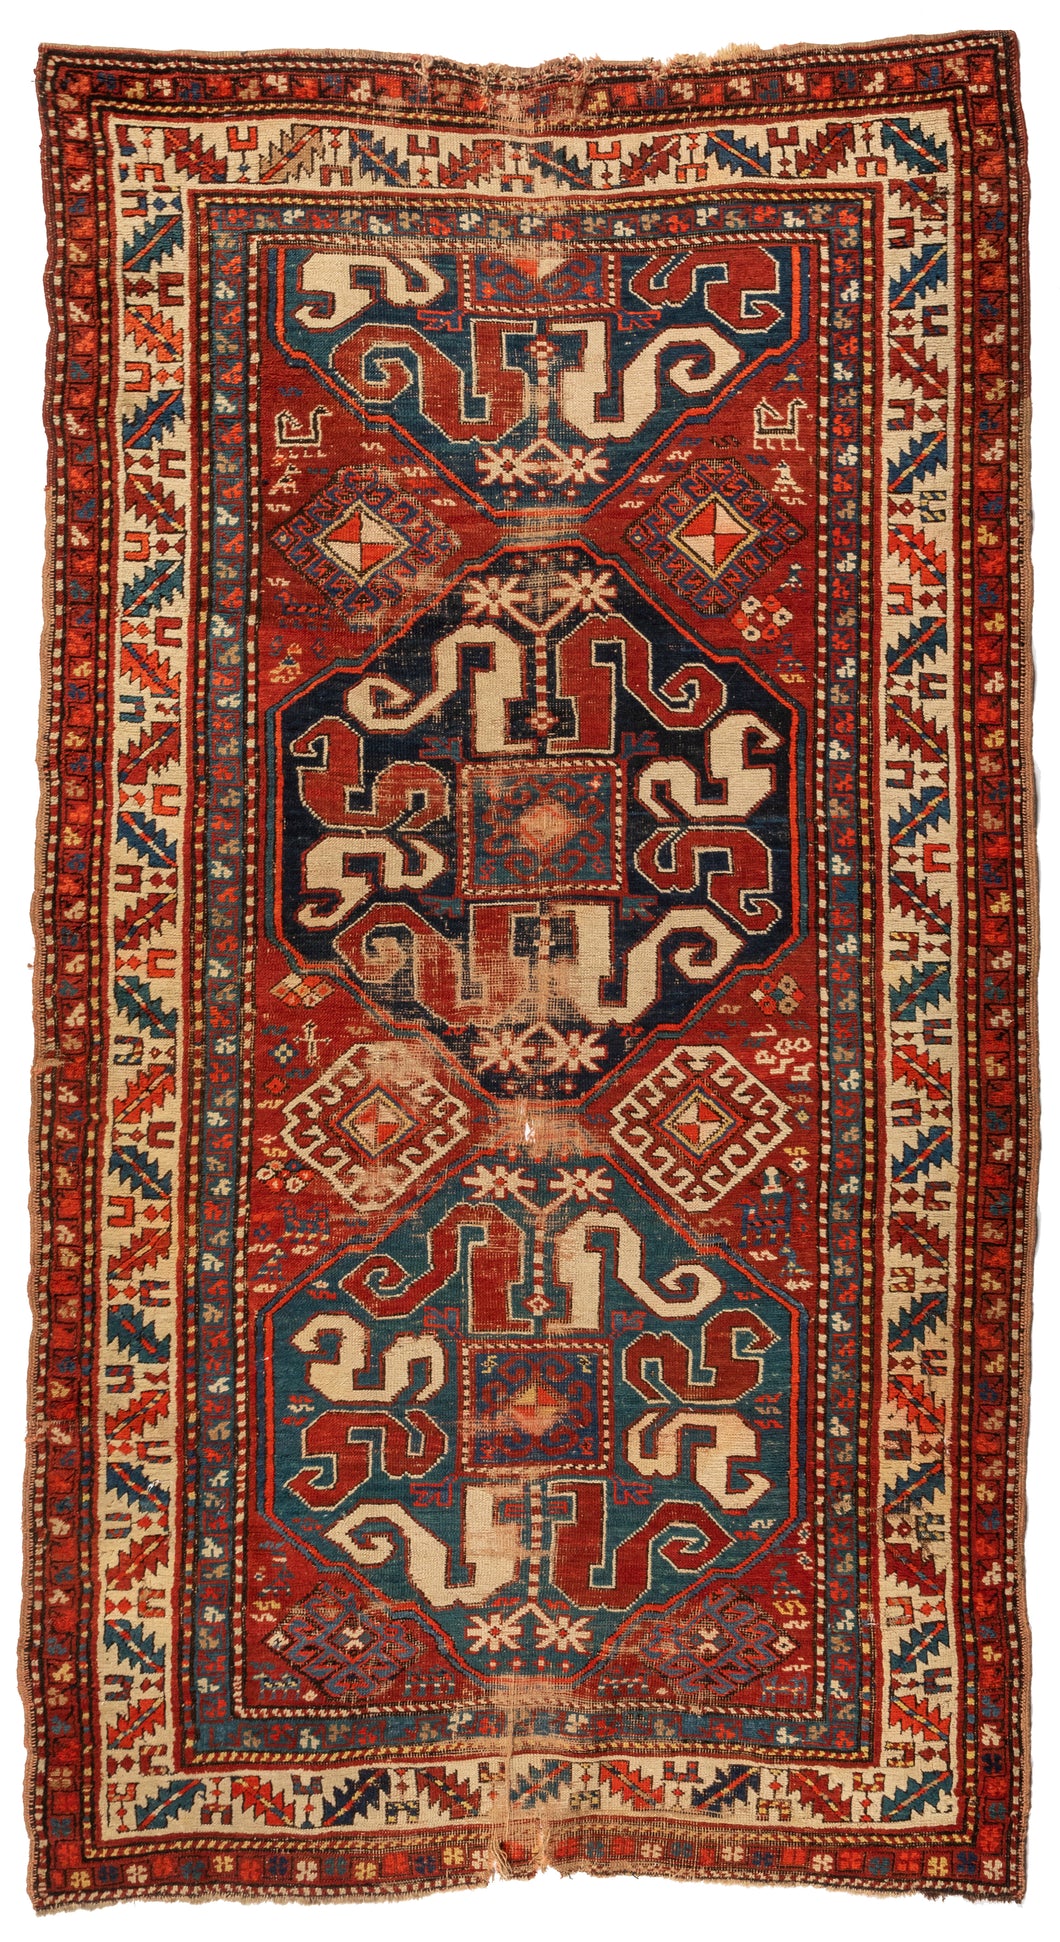 Antique Distressed Cloudband Kazak Carpet